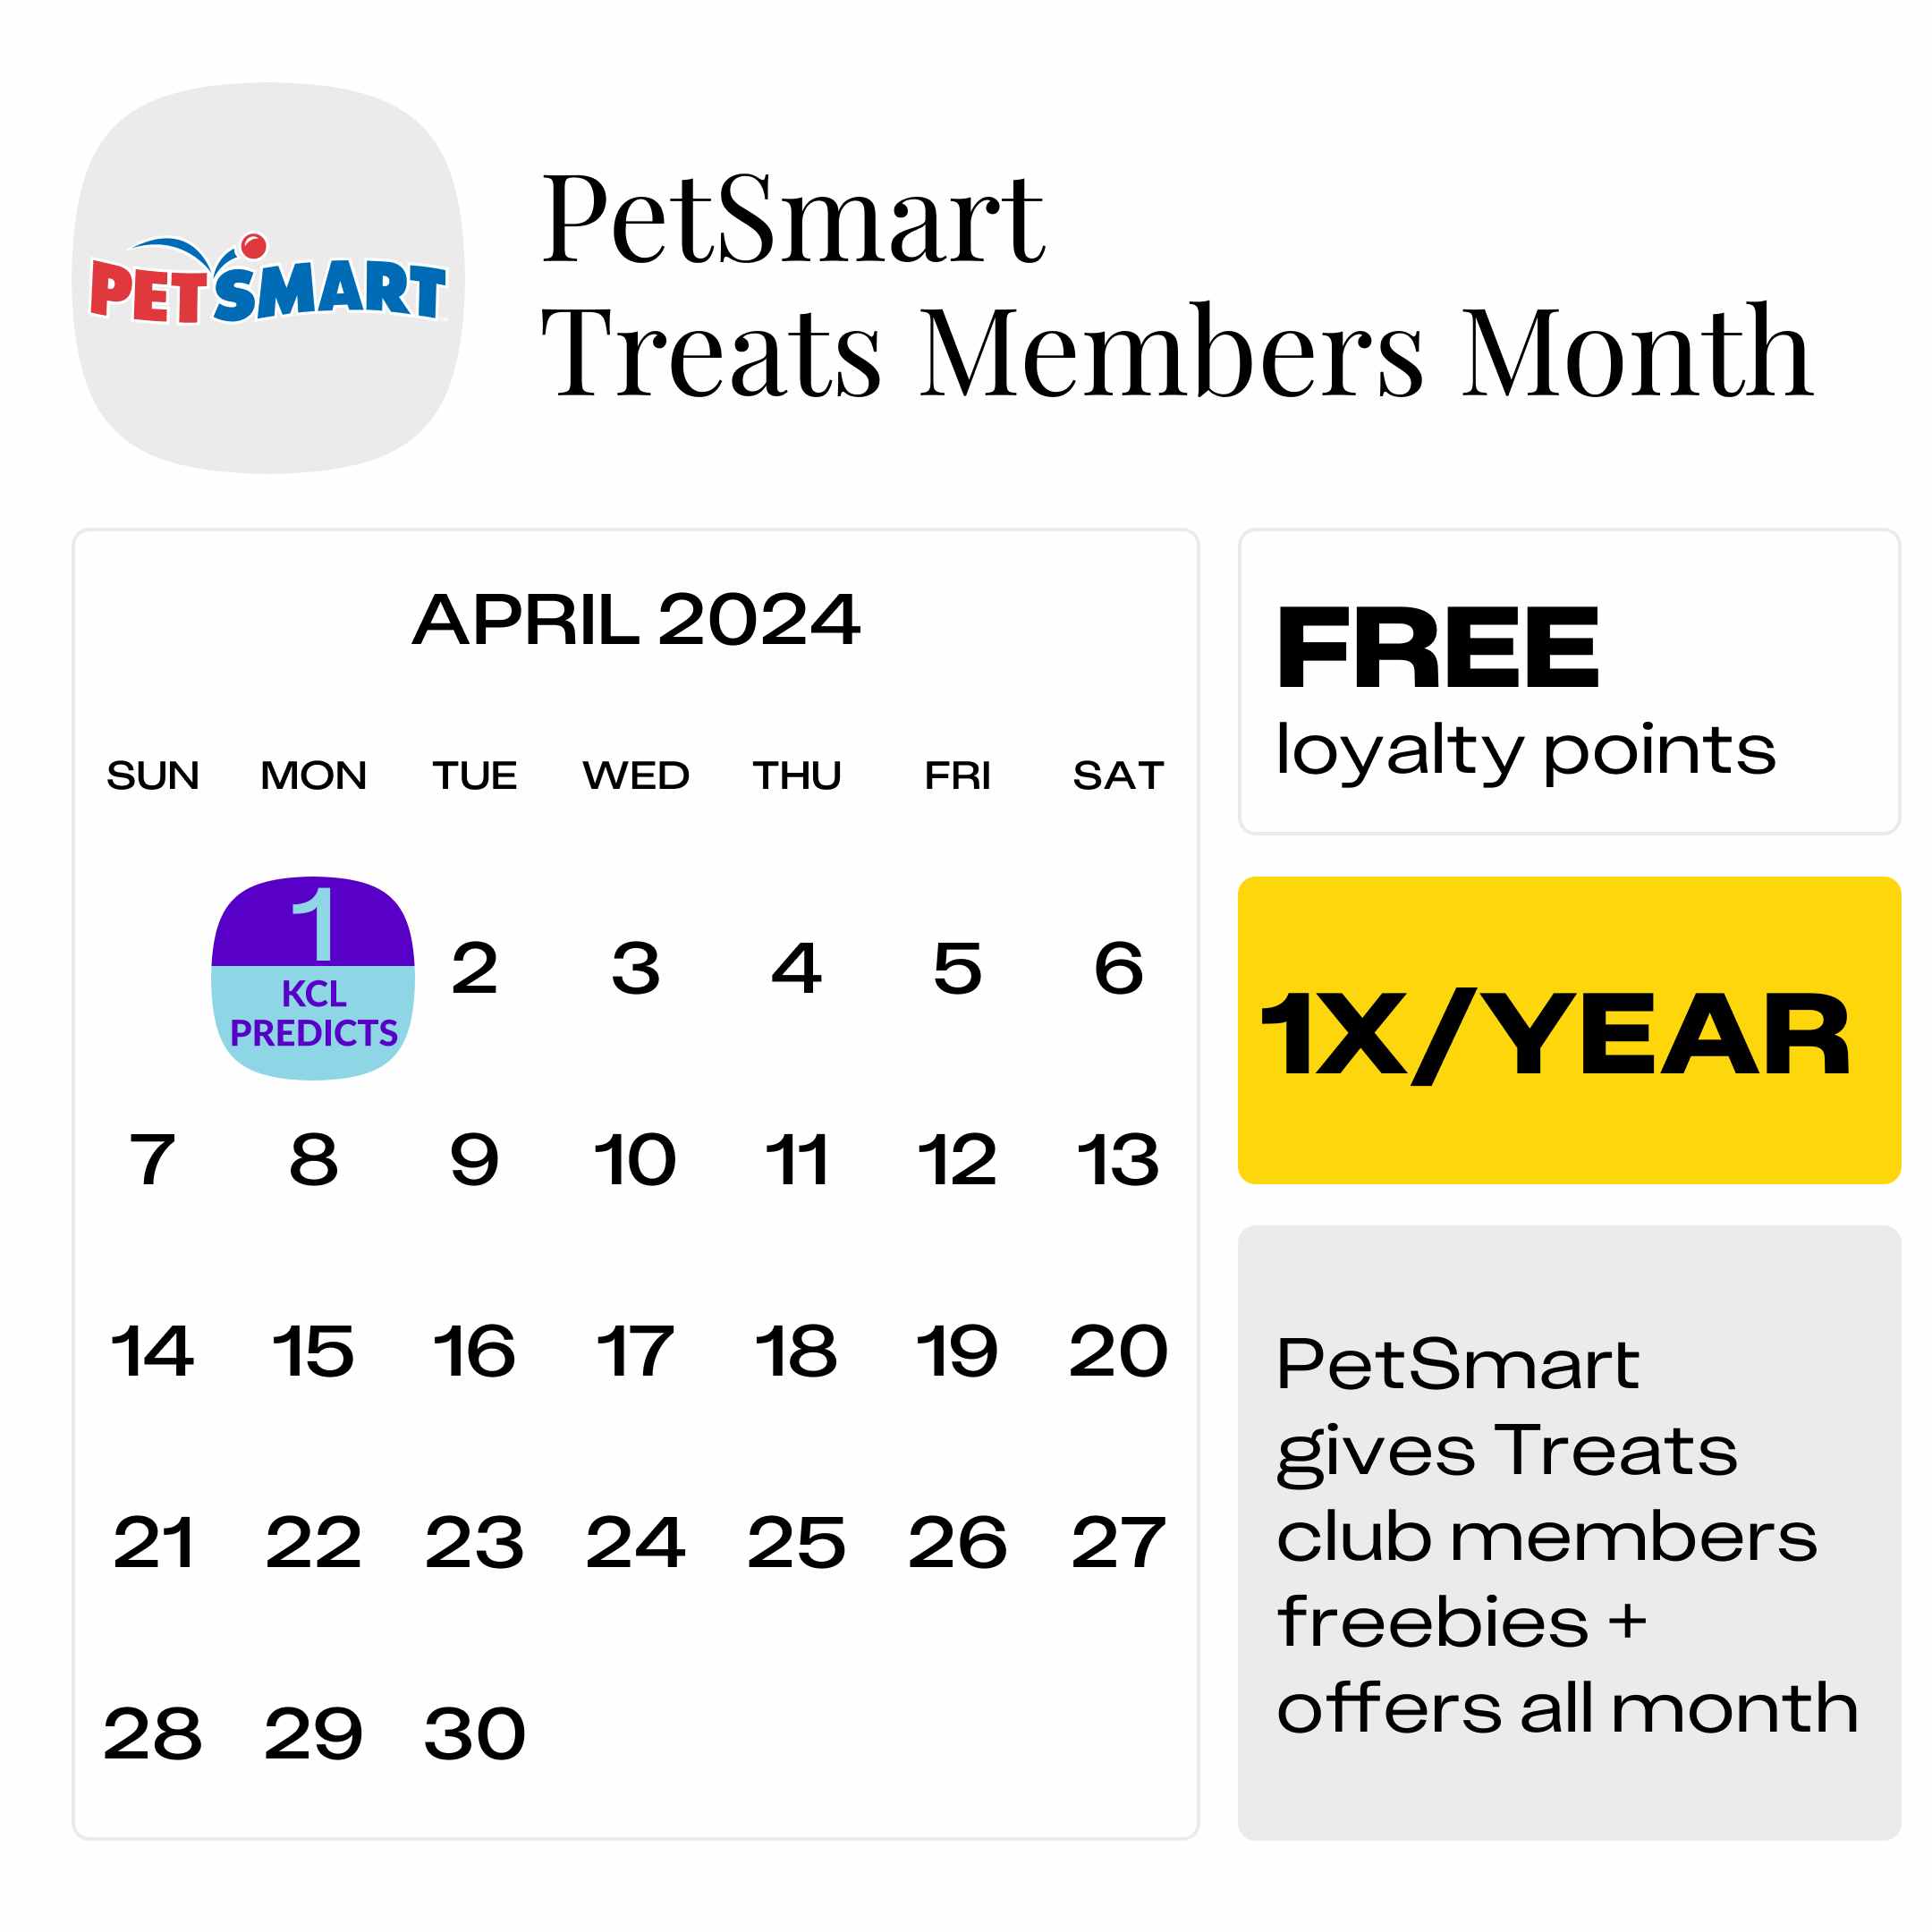 PetSmart-Treats-Members-Month